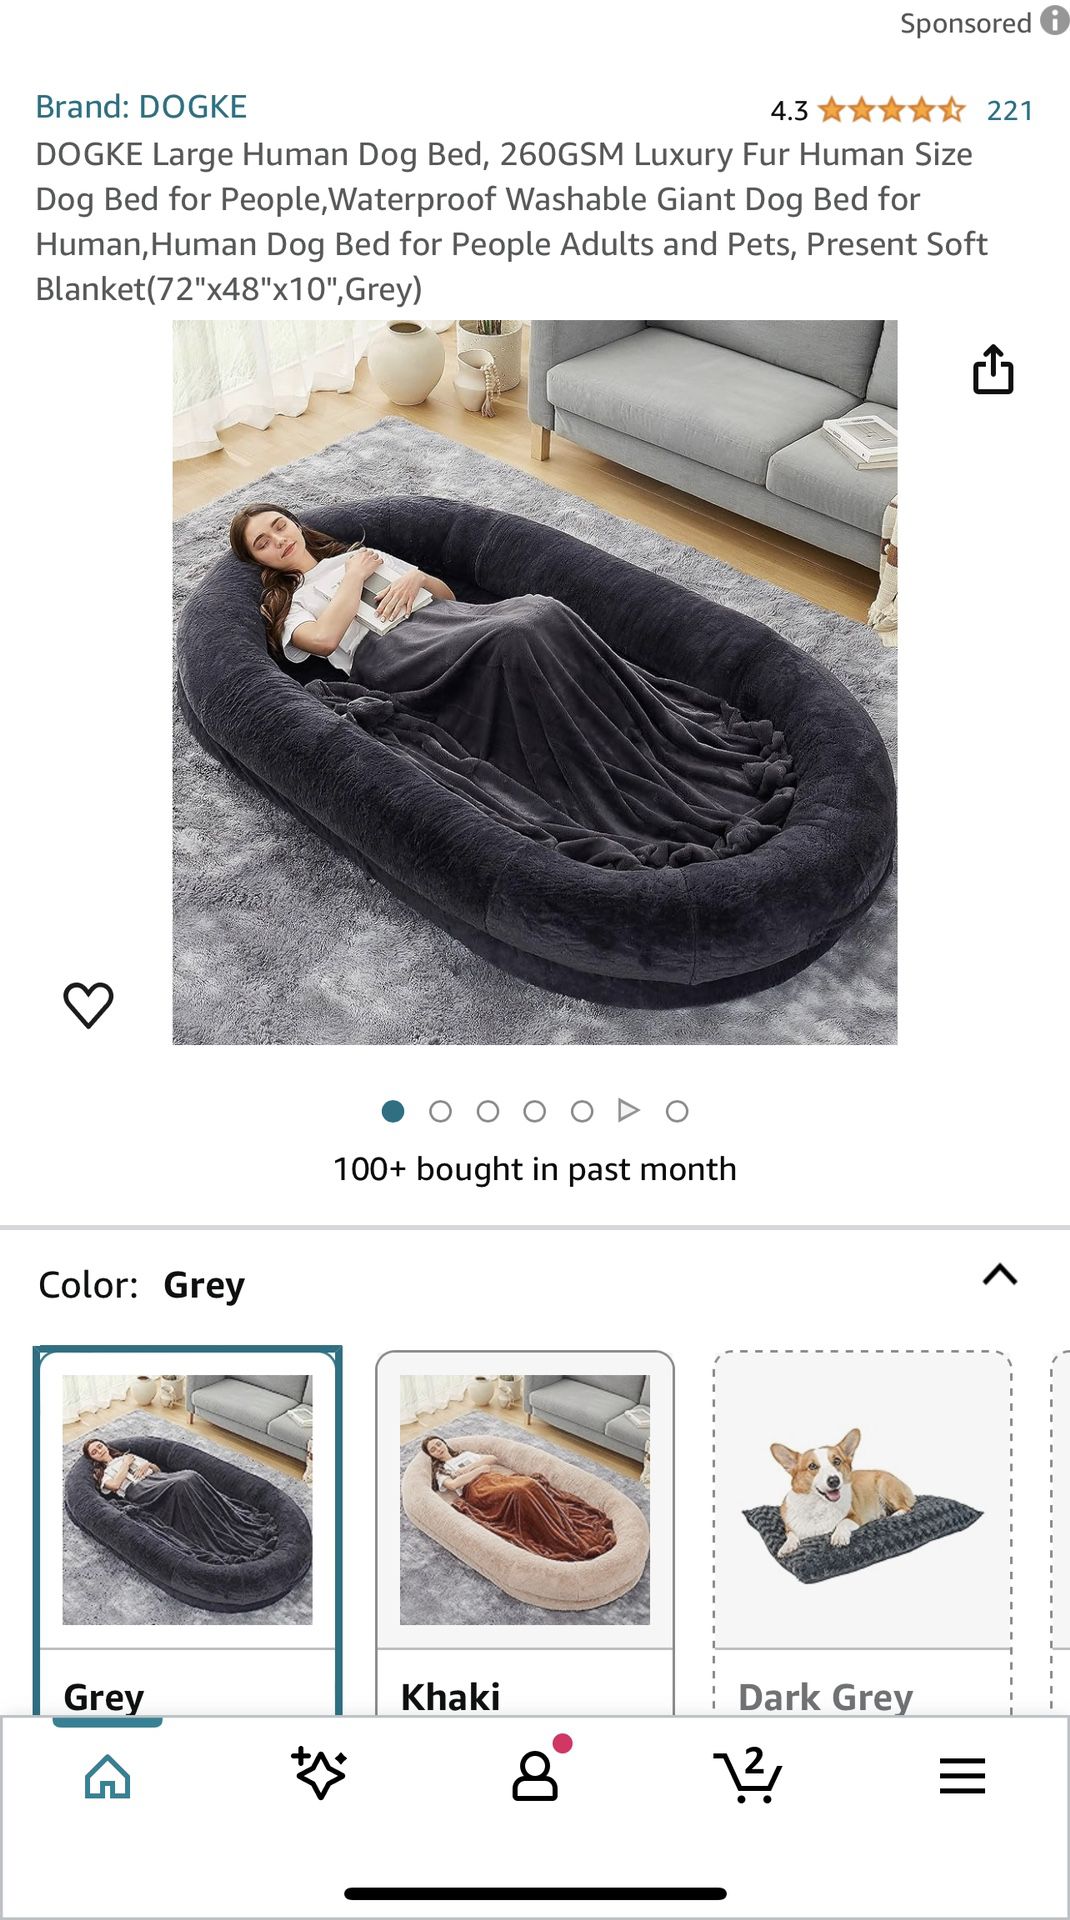 DOGKE Large Human Dog Bed